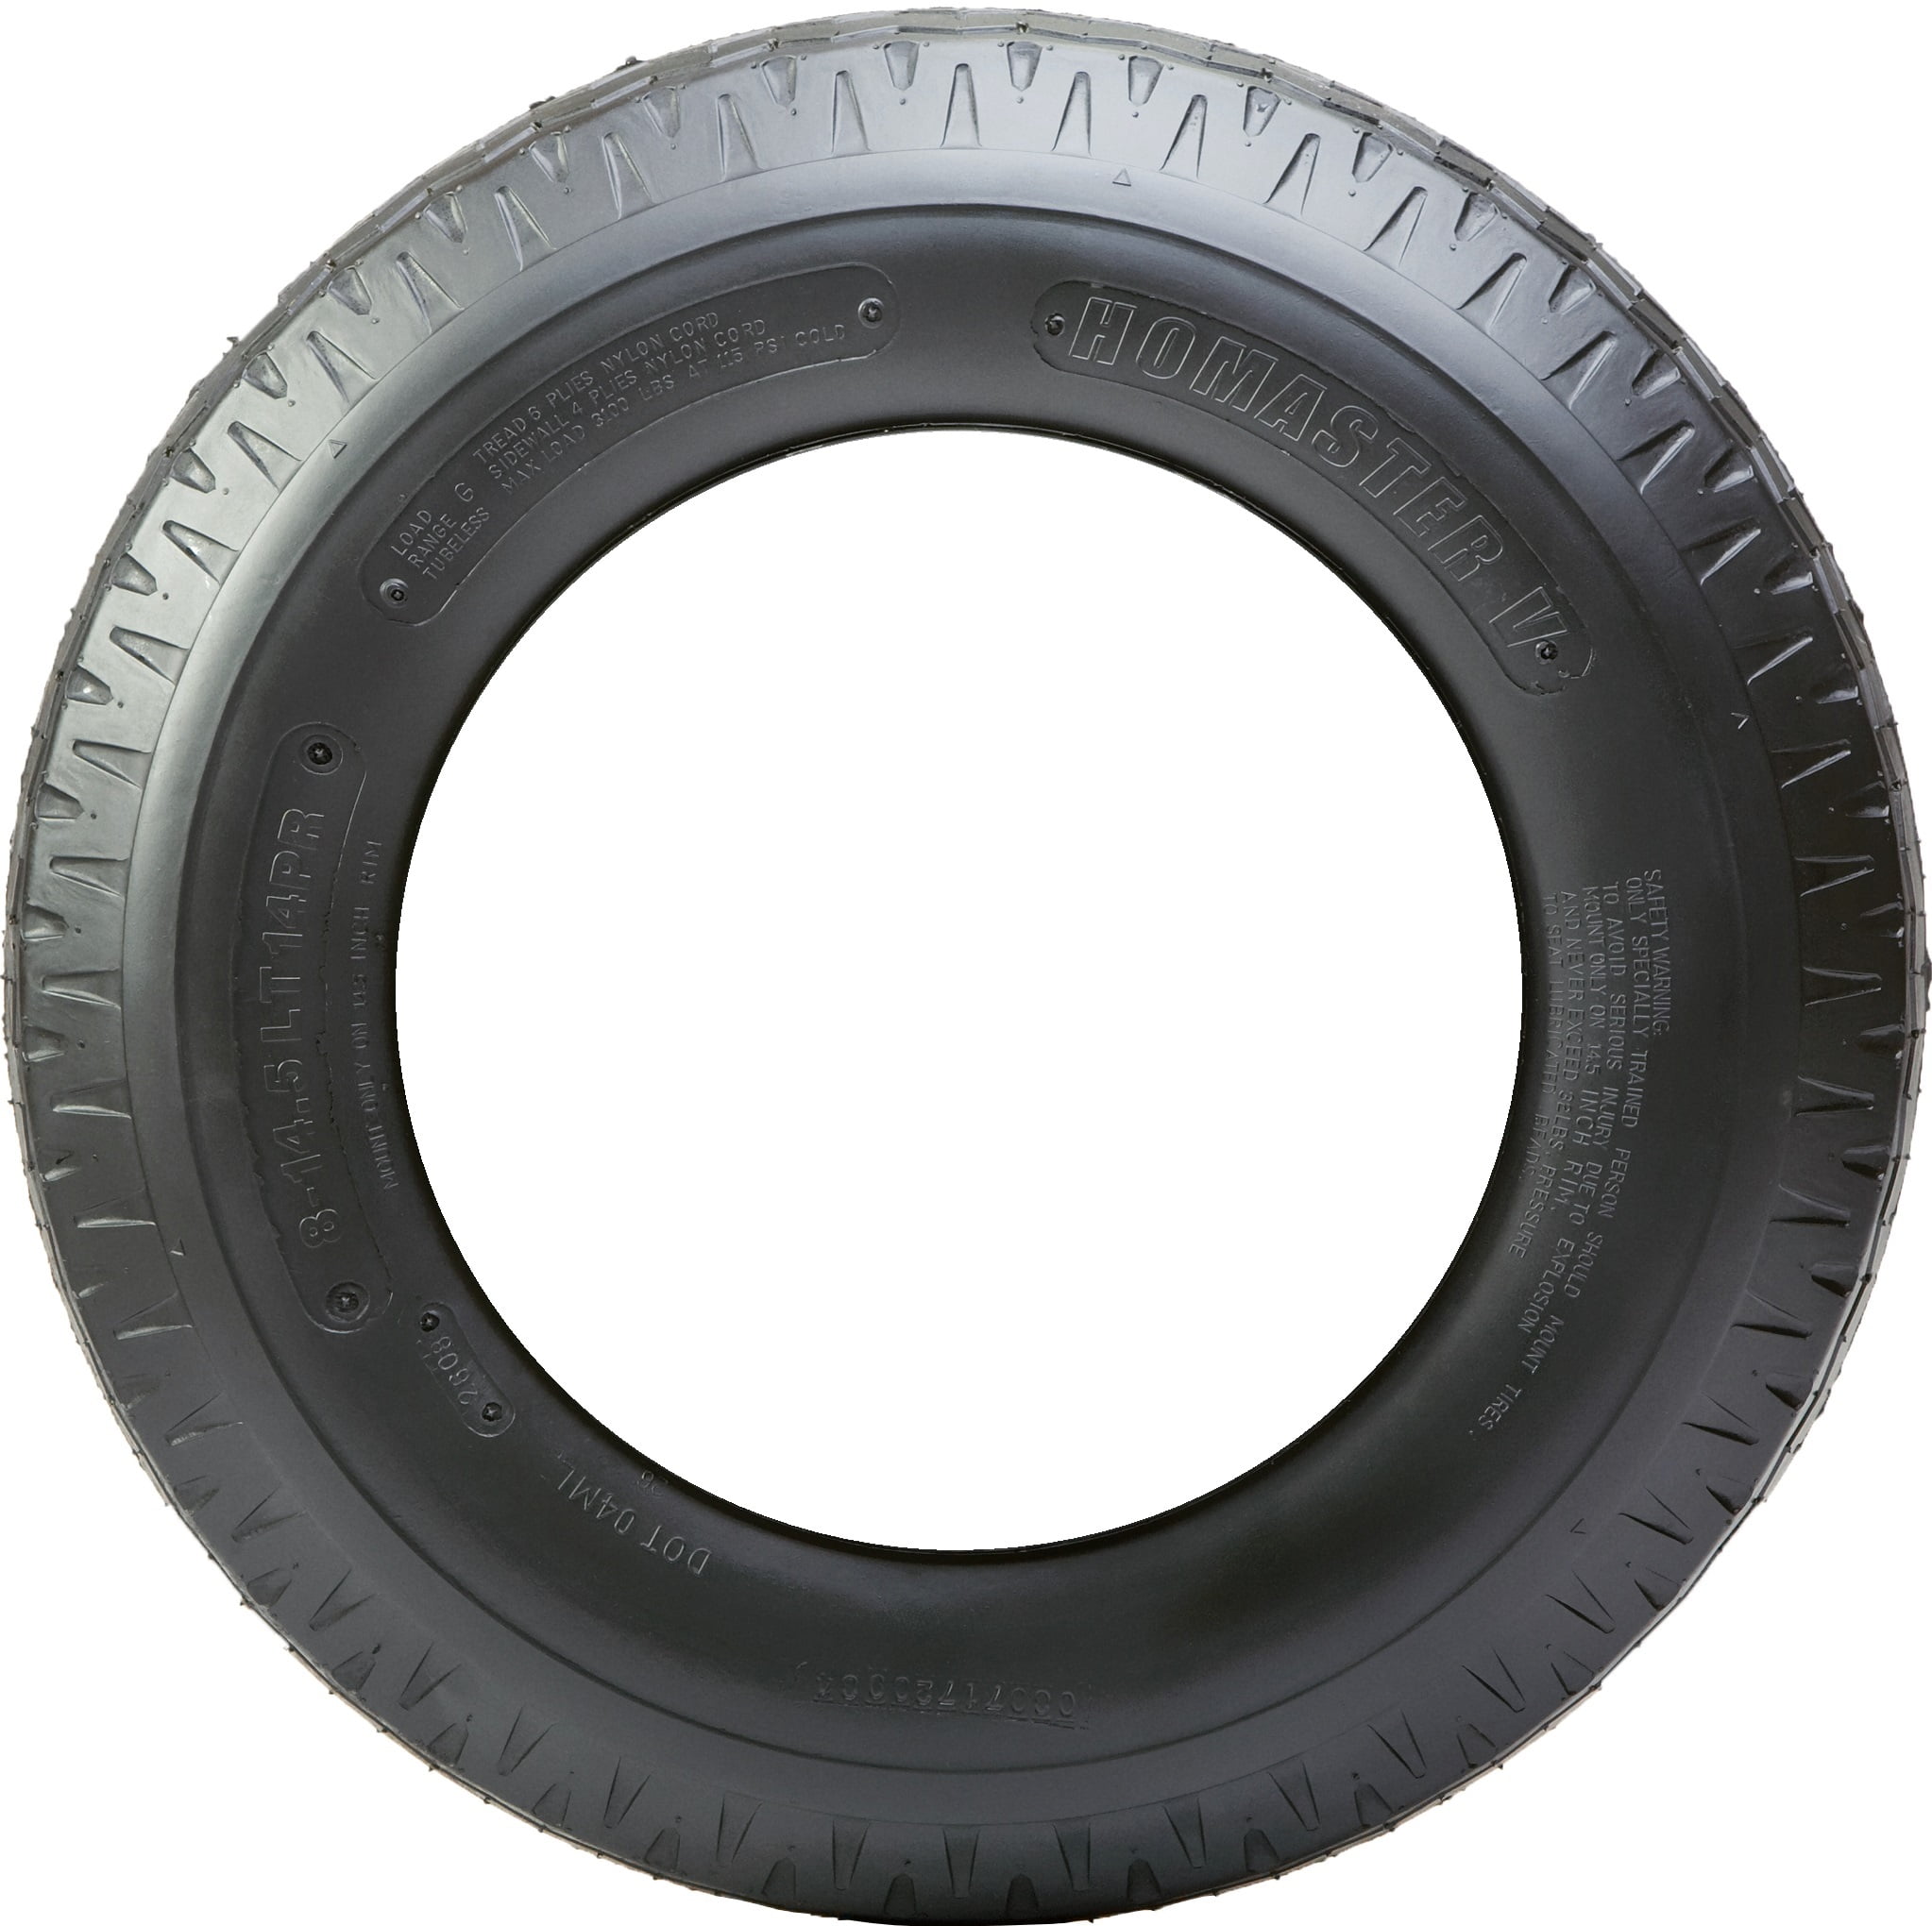 8 14 5 Tire Conversion Chart